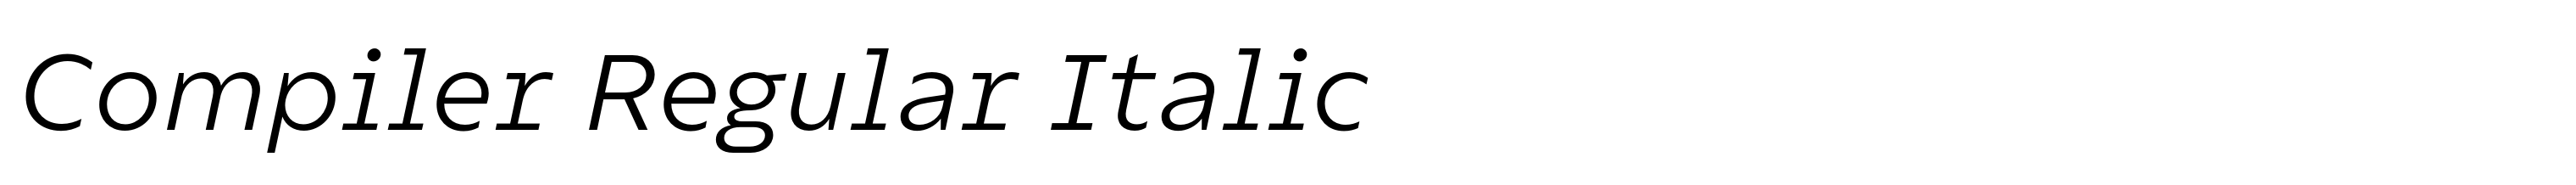 Compiler Regular Italic